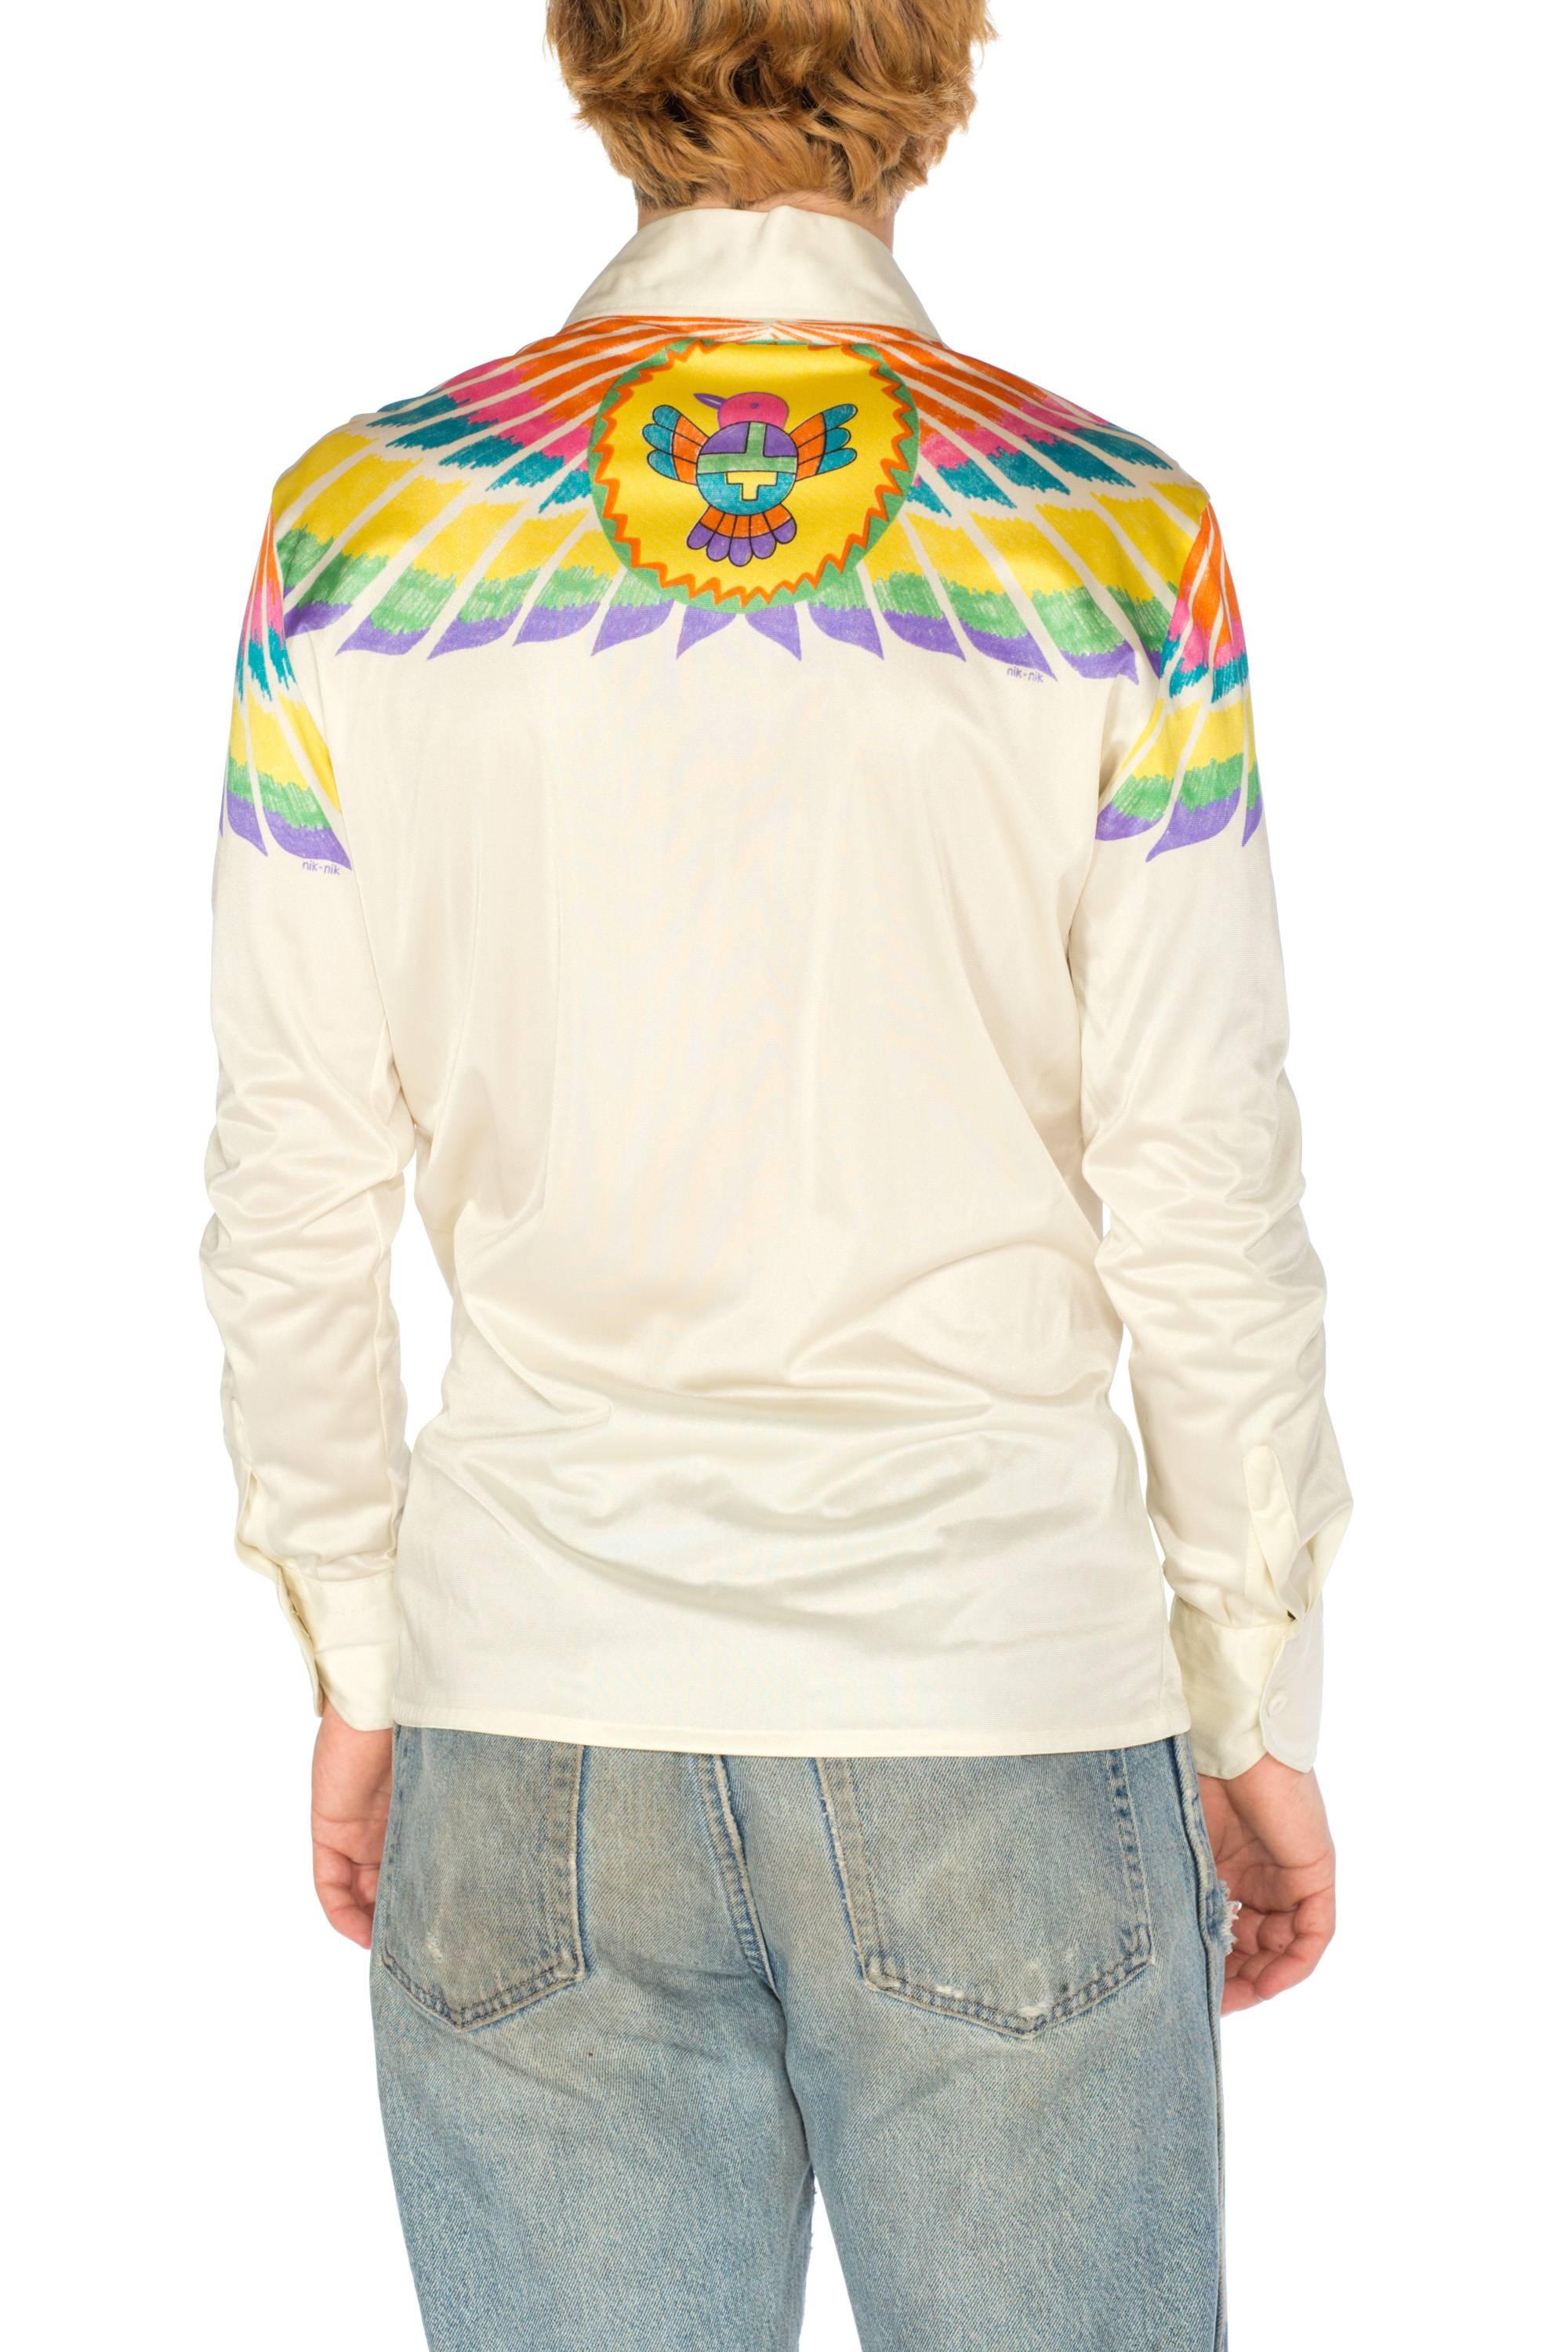 White Native American Feather Printed Mens Nik Nik Disco Shirt, 1970s 